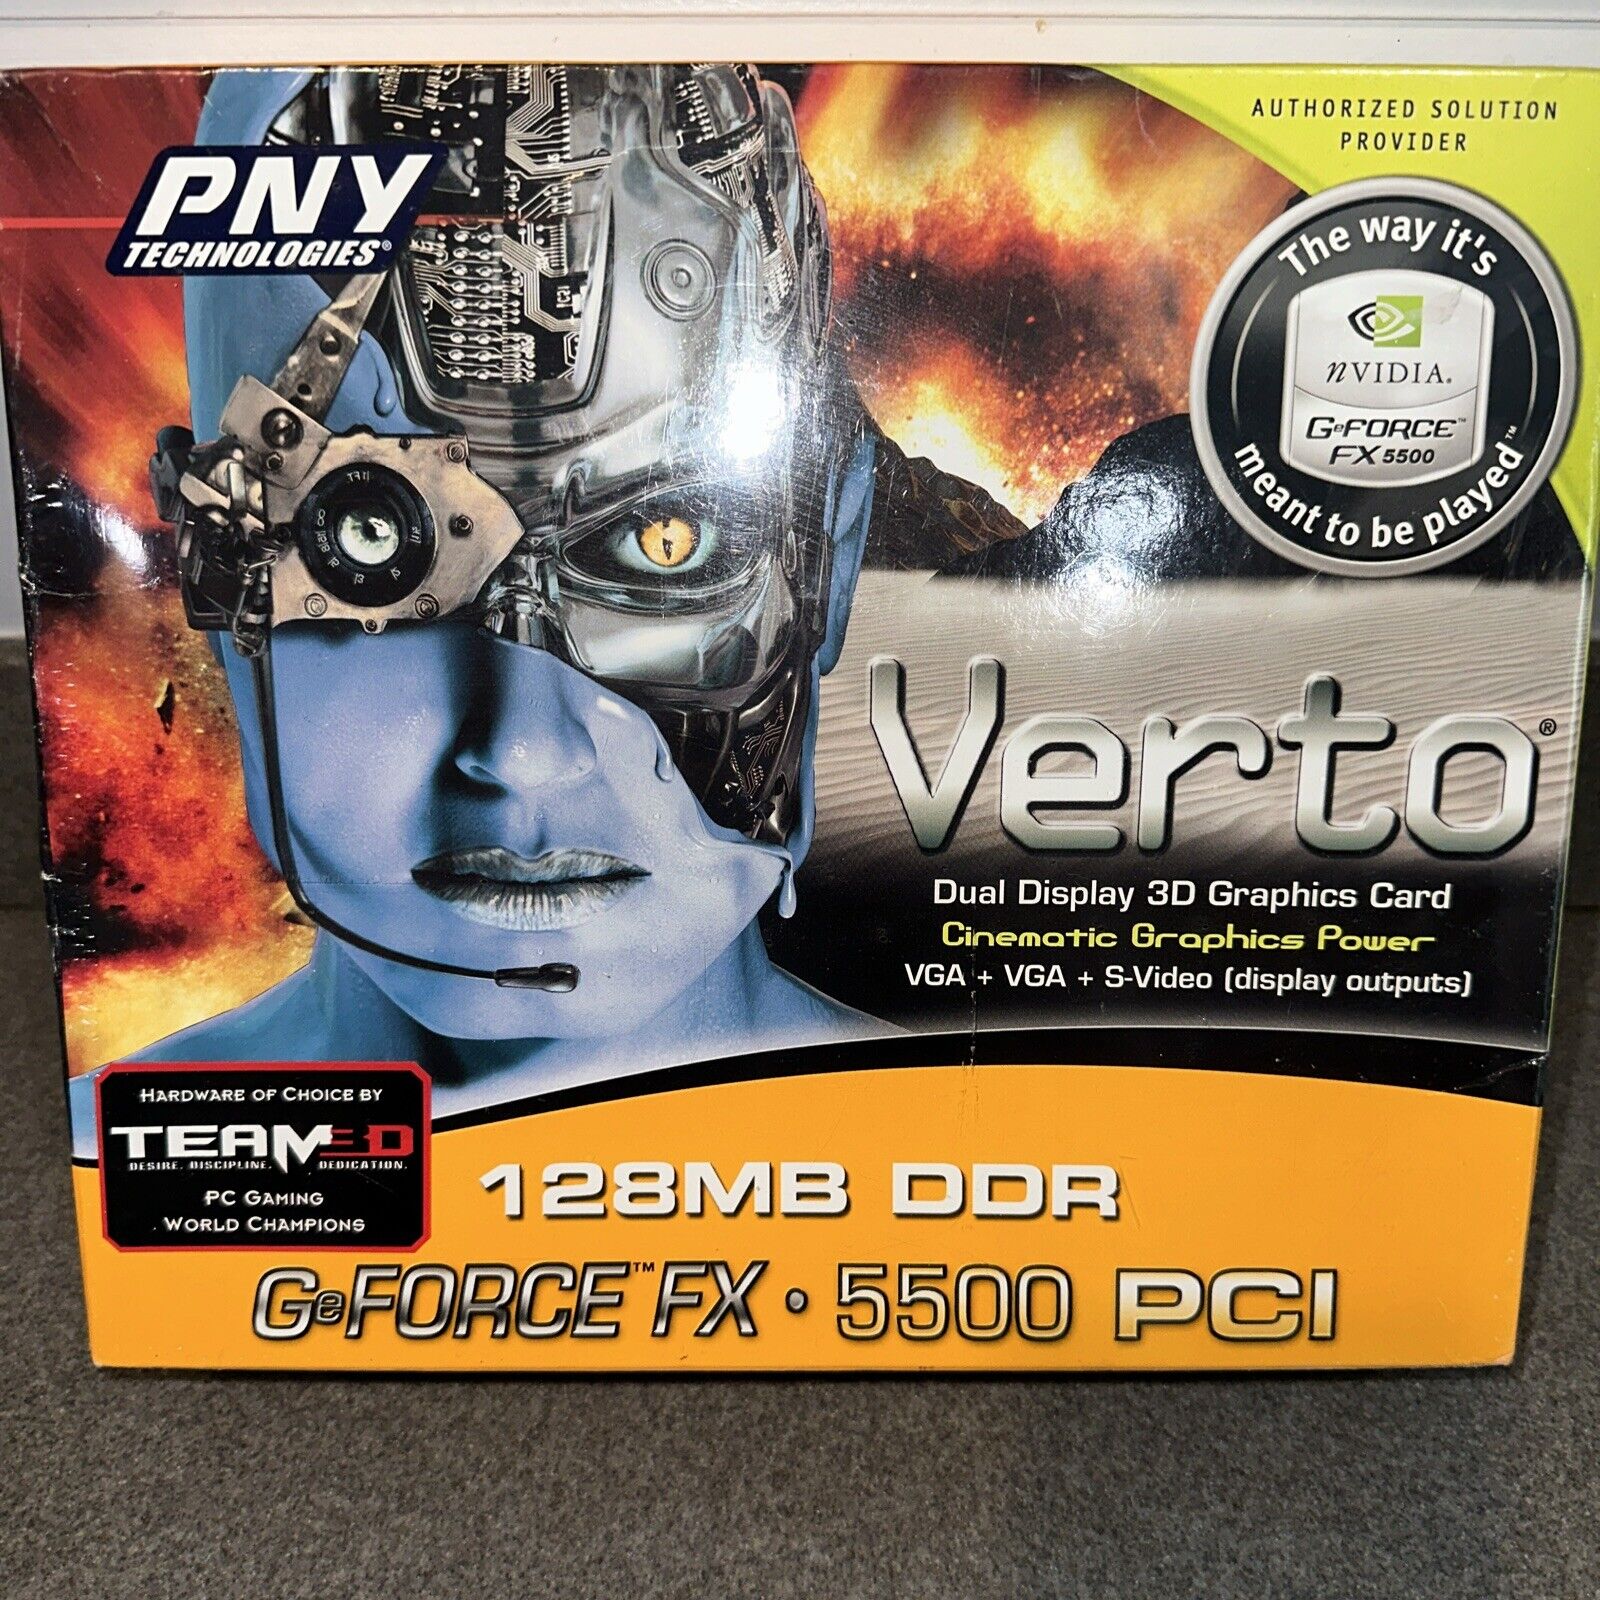 PNY Technologies Fx5500 VERTO Dual Display 3-D Graphics Card brand new